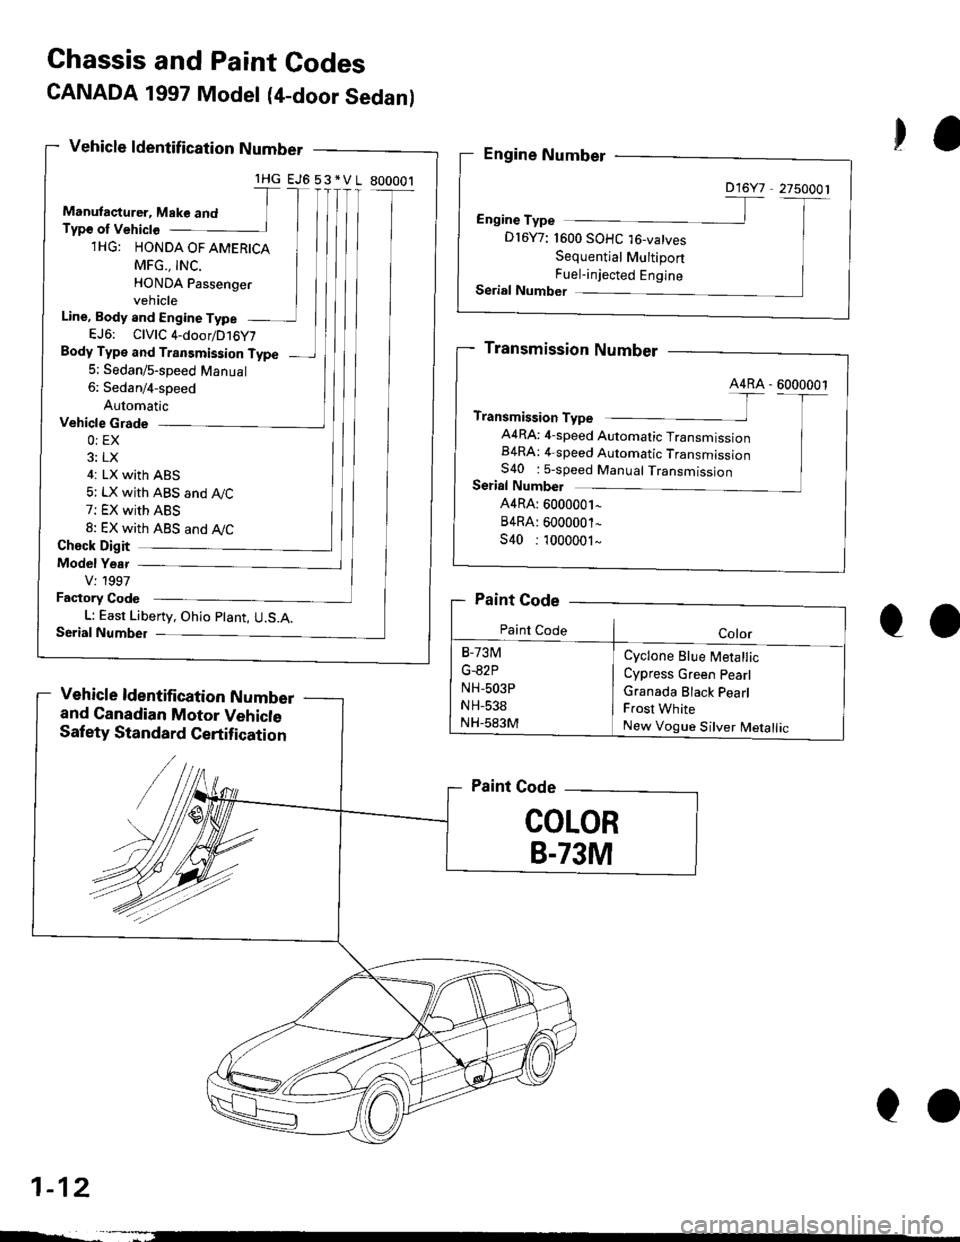 HONDA CIVIC 1999 6.G Workshop Manual Chassis and Paint Godes
CANADA 1997 Modet (4-door Sedan)
Vehicle ldentification Number
and Canadian Motor Vehicle
Safety Standard Certification
1-12
]l
00
Paint Code
COLOR
B.73M
ea
lHG EJ6 53 *V L 800